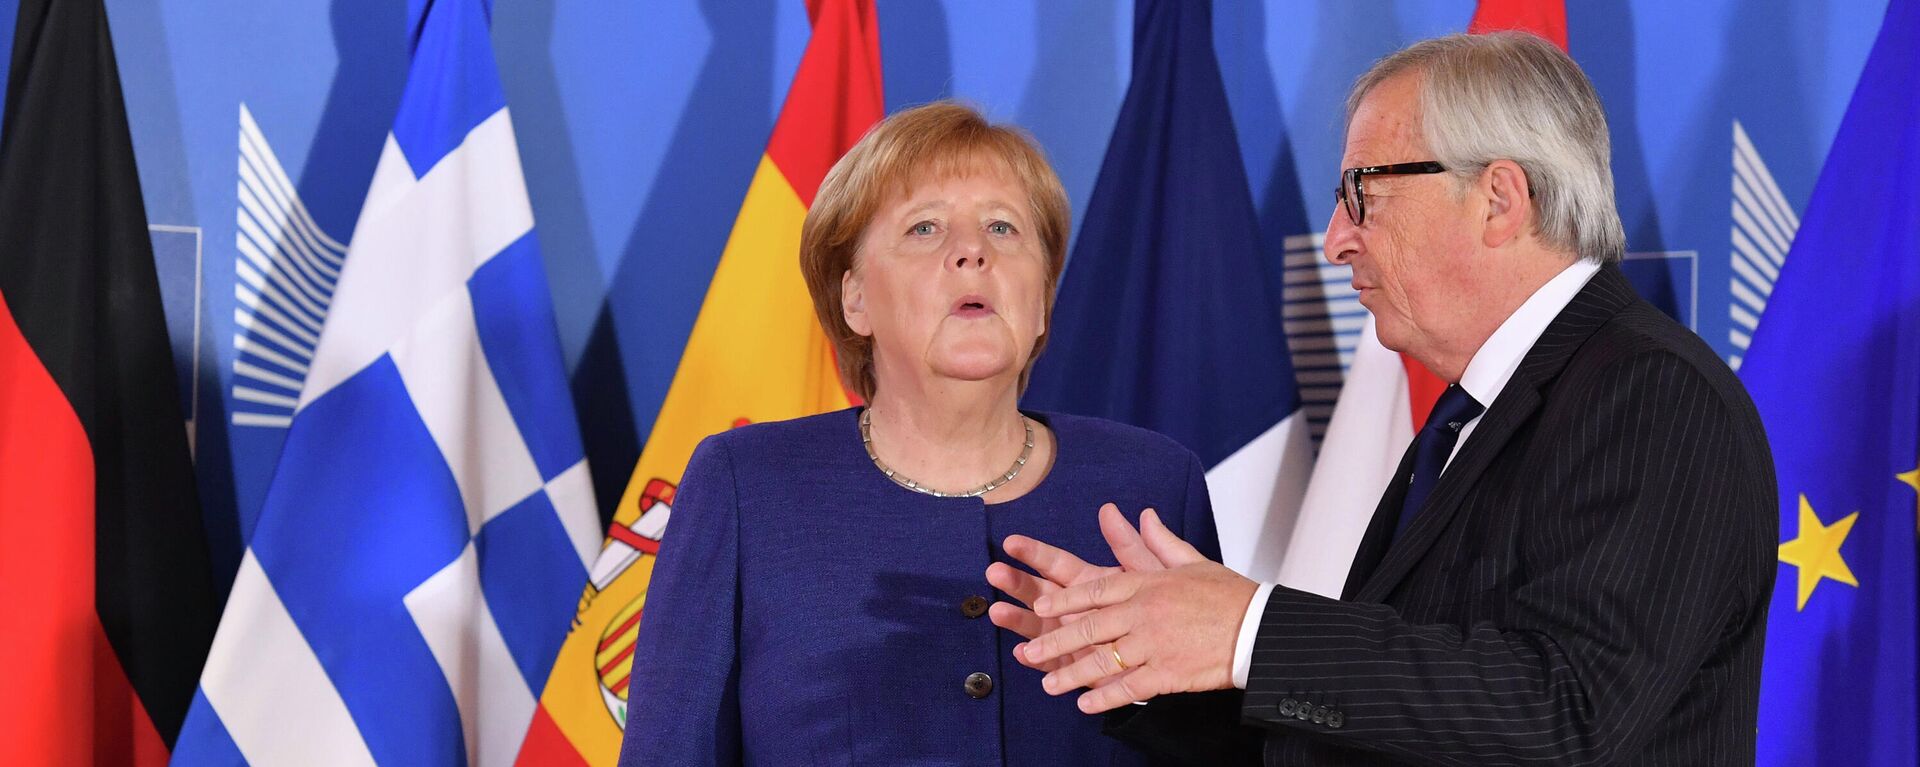 European Commission President Jean-Claude Juncker, right, speaks with German Chancellor Angela Merkel during an informal EU summit on migration at EU headquarters in Brussels, Sunday, June 24, 2018. (AP Photo/Geert Vanden Wijngaert, Pool) - Sputnik International, 1920, 04.12.2021